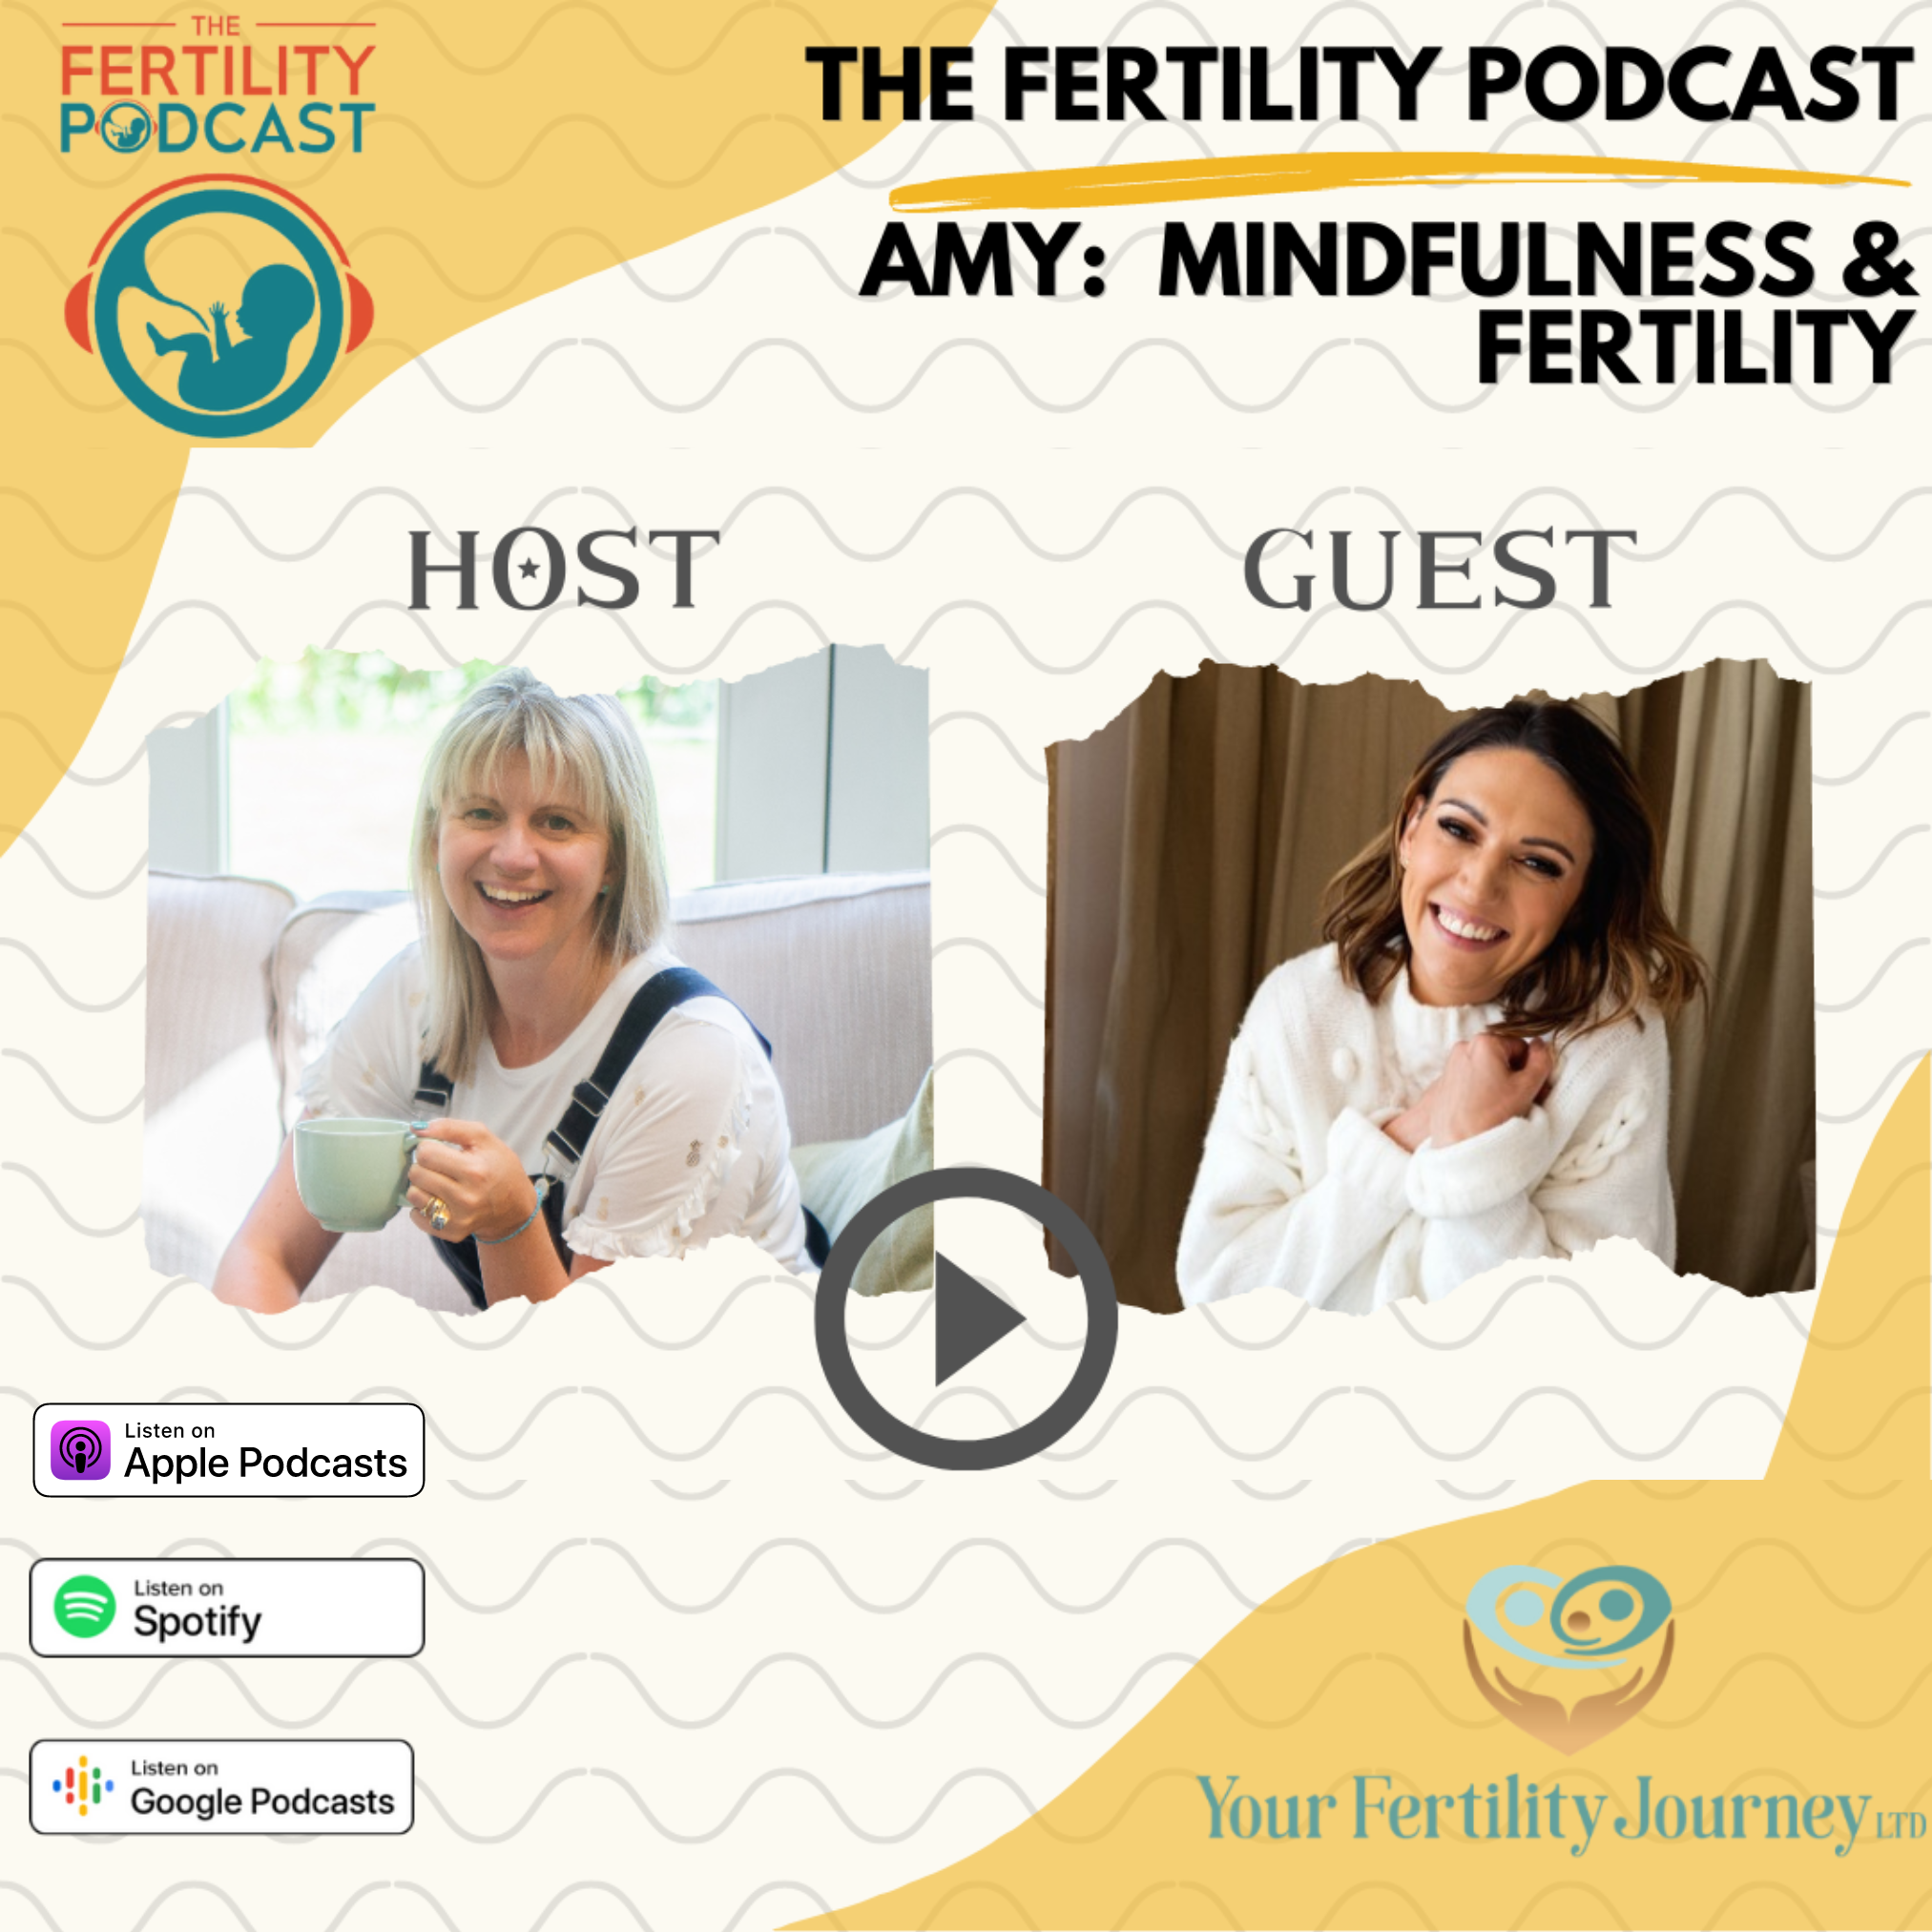 Amy: Mindfulness & Fertility